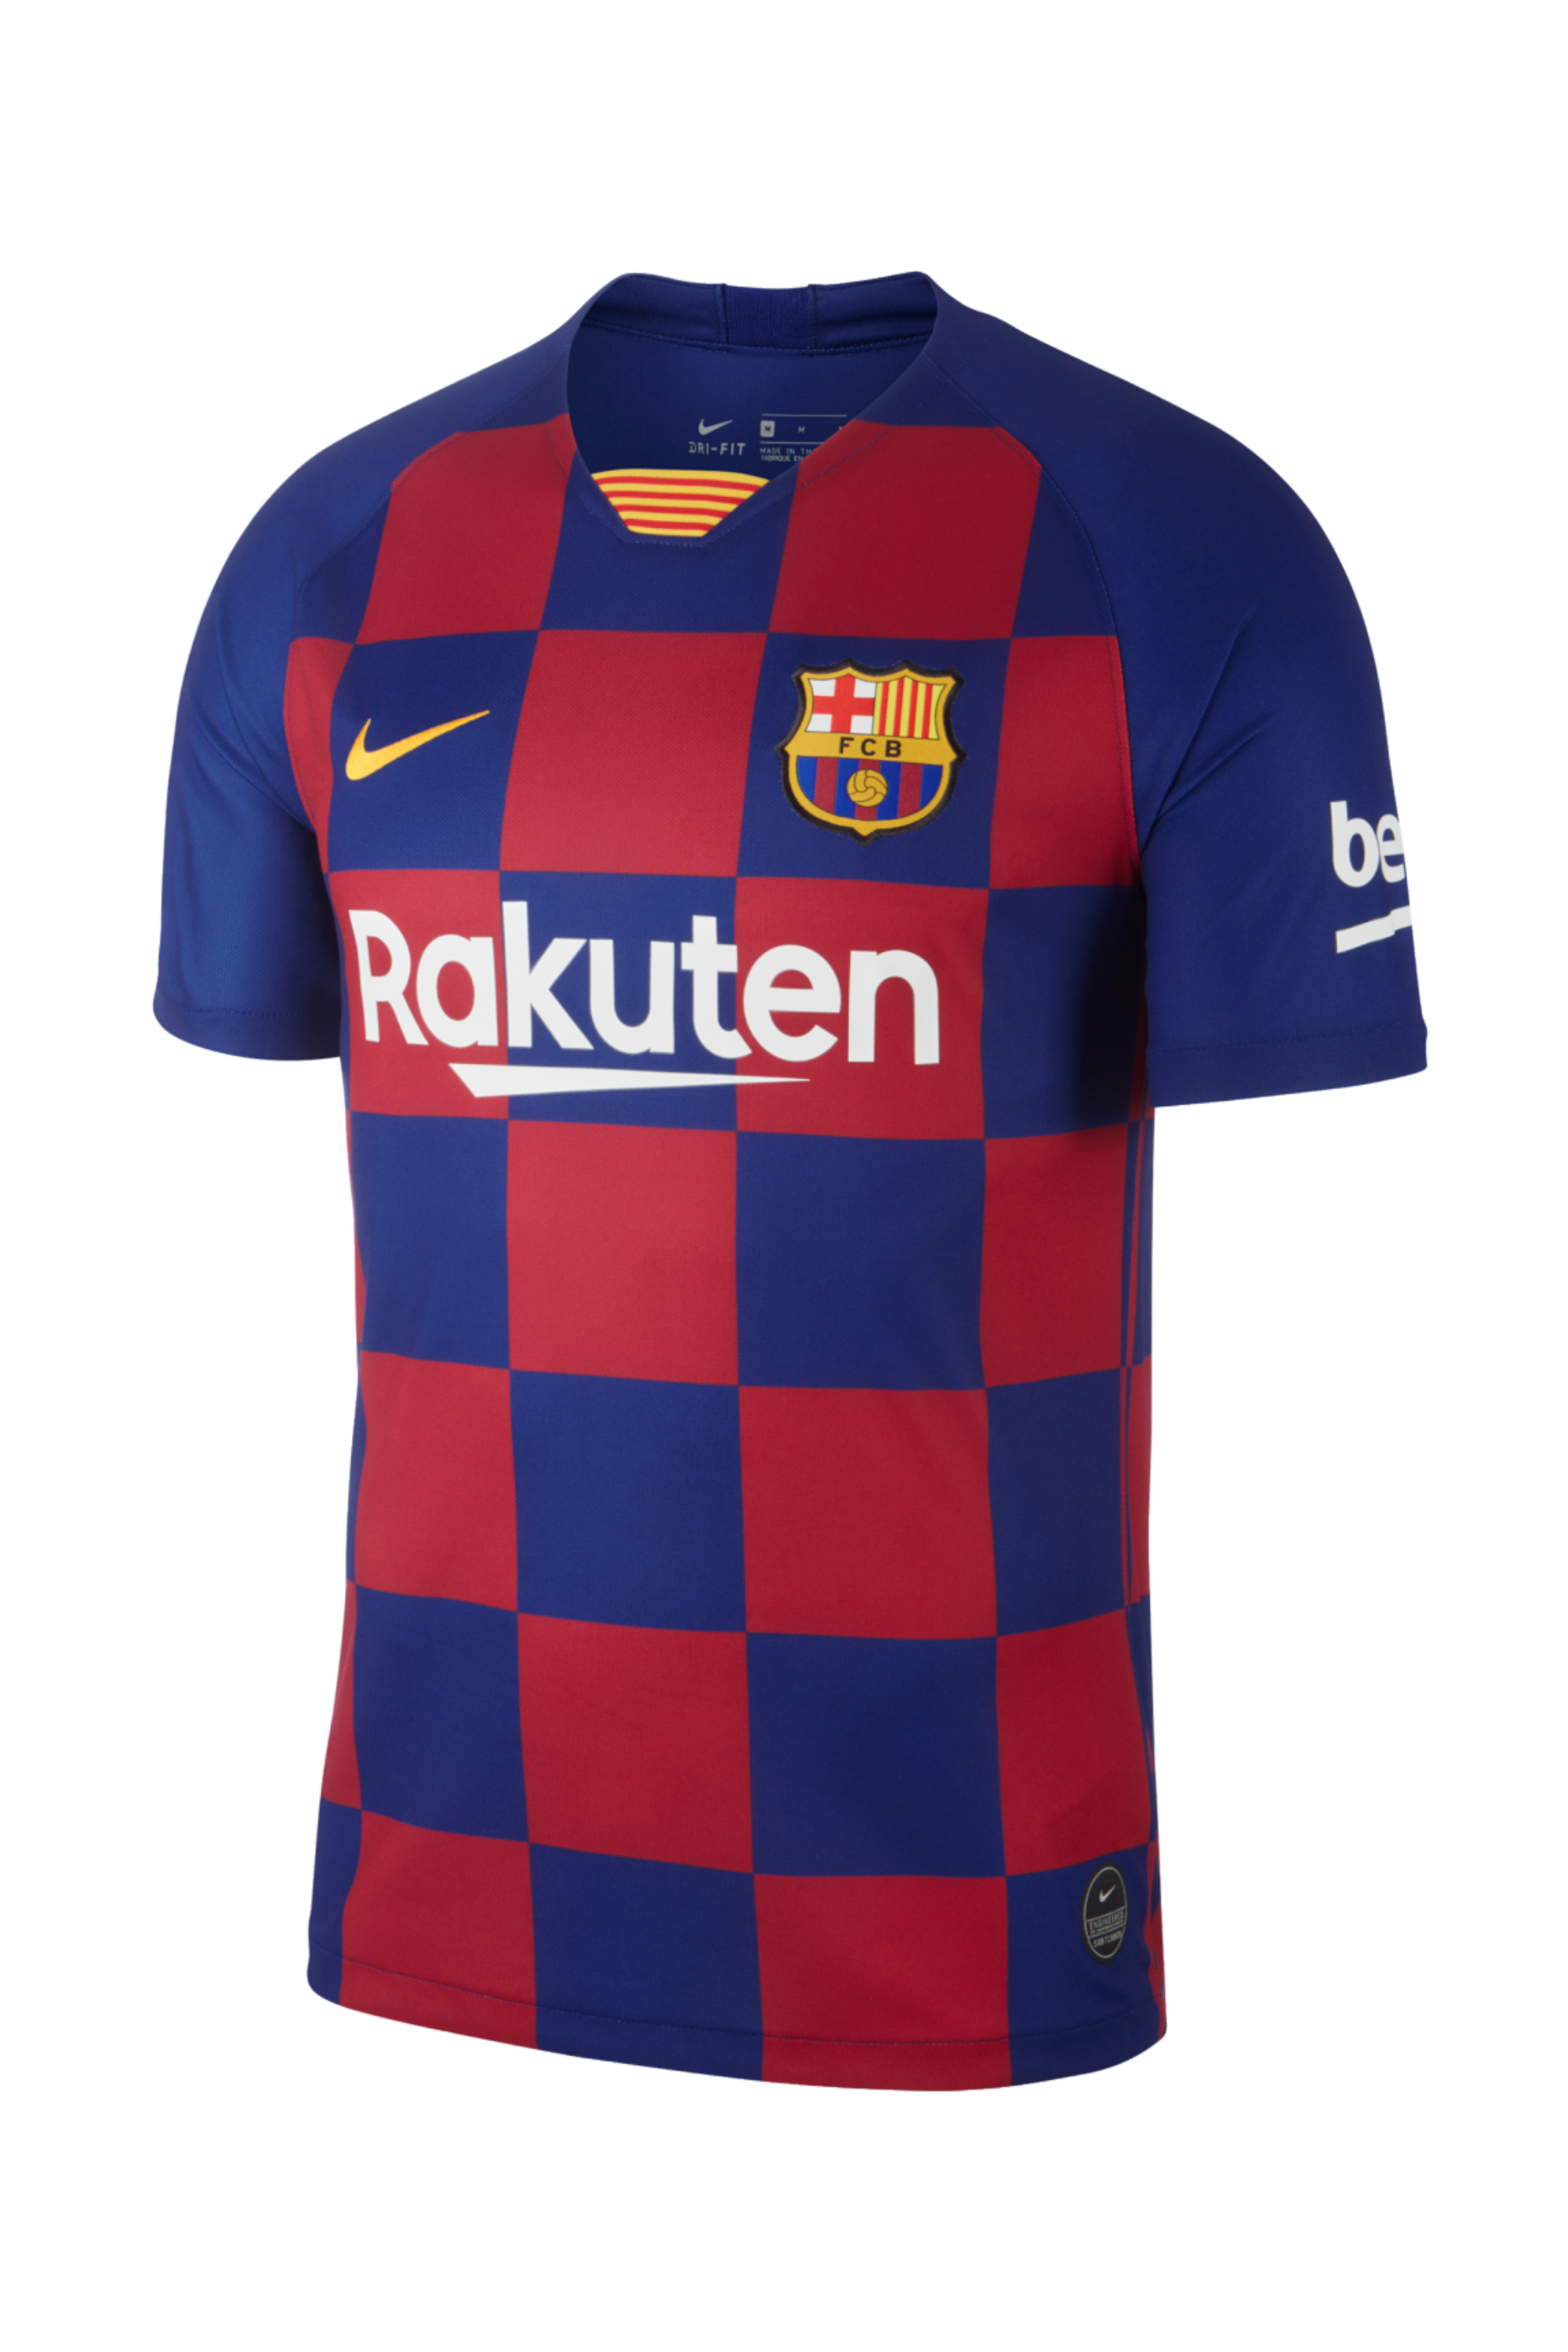 barcelona stadium jersey